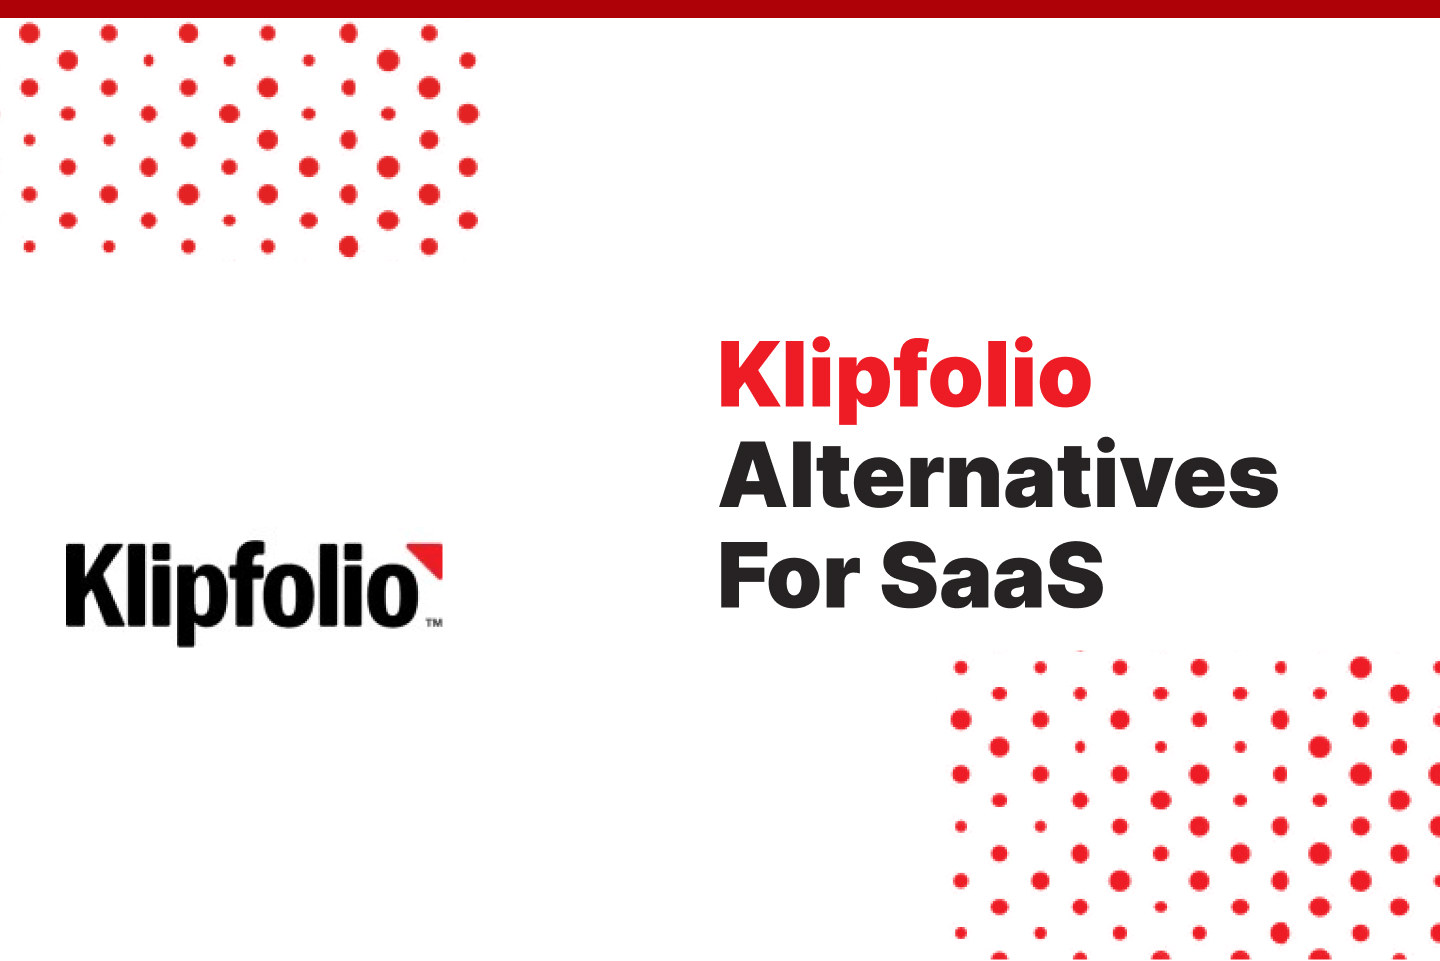 Top 5 Klipfolio Alternatives: Which One Is The Best?